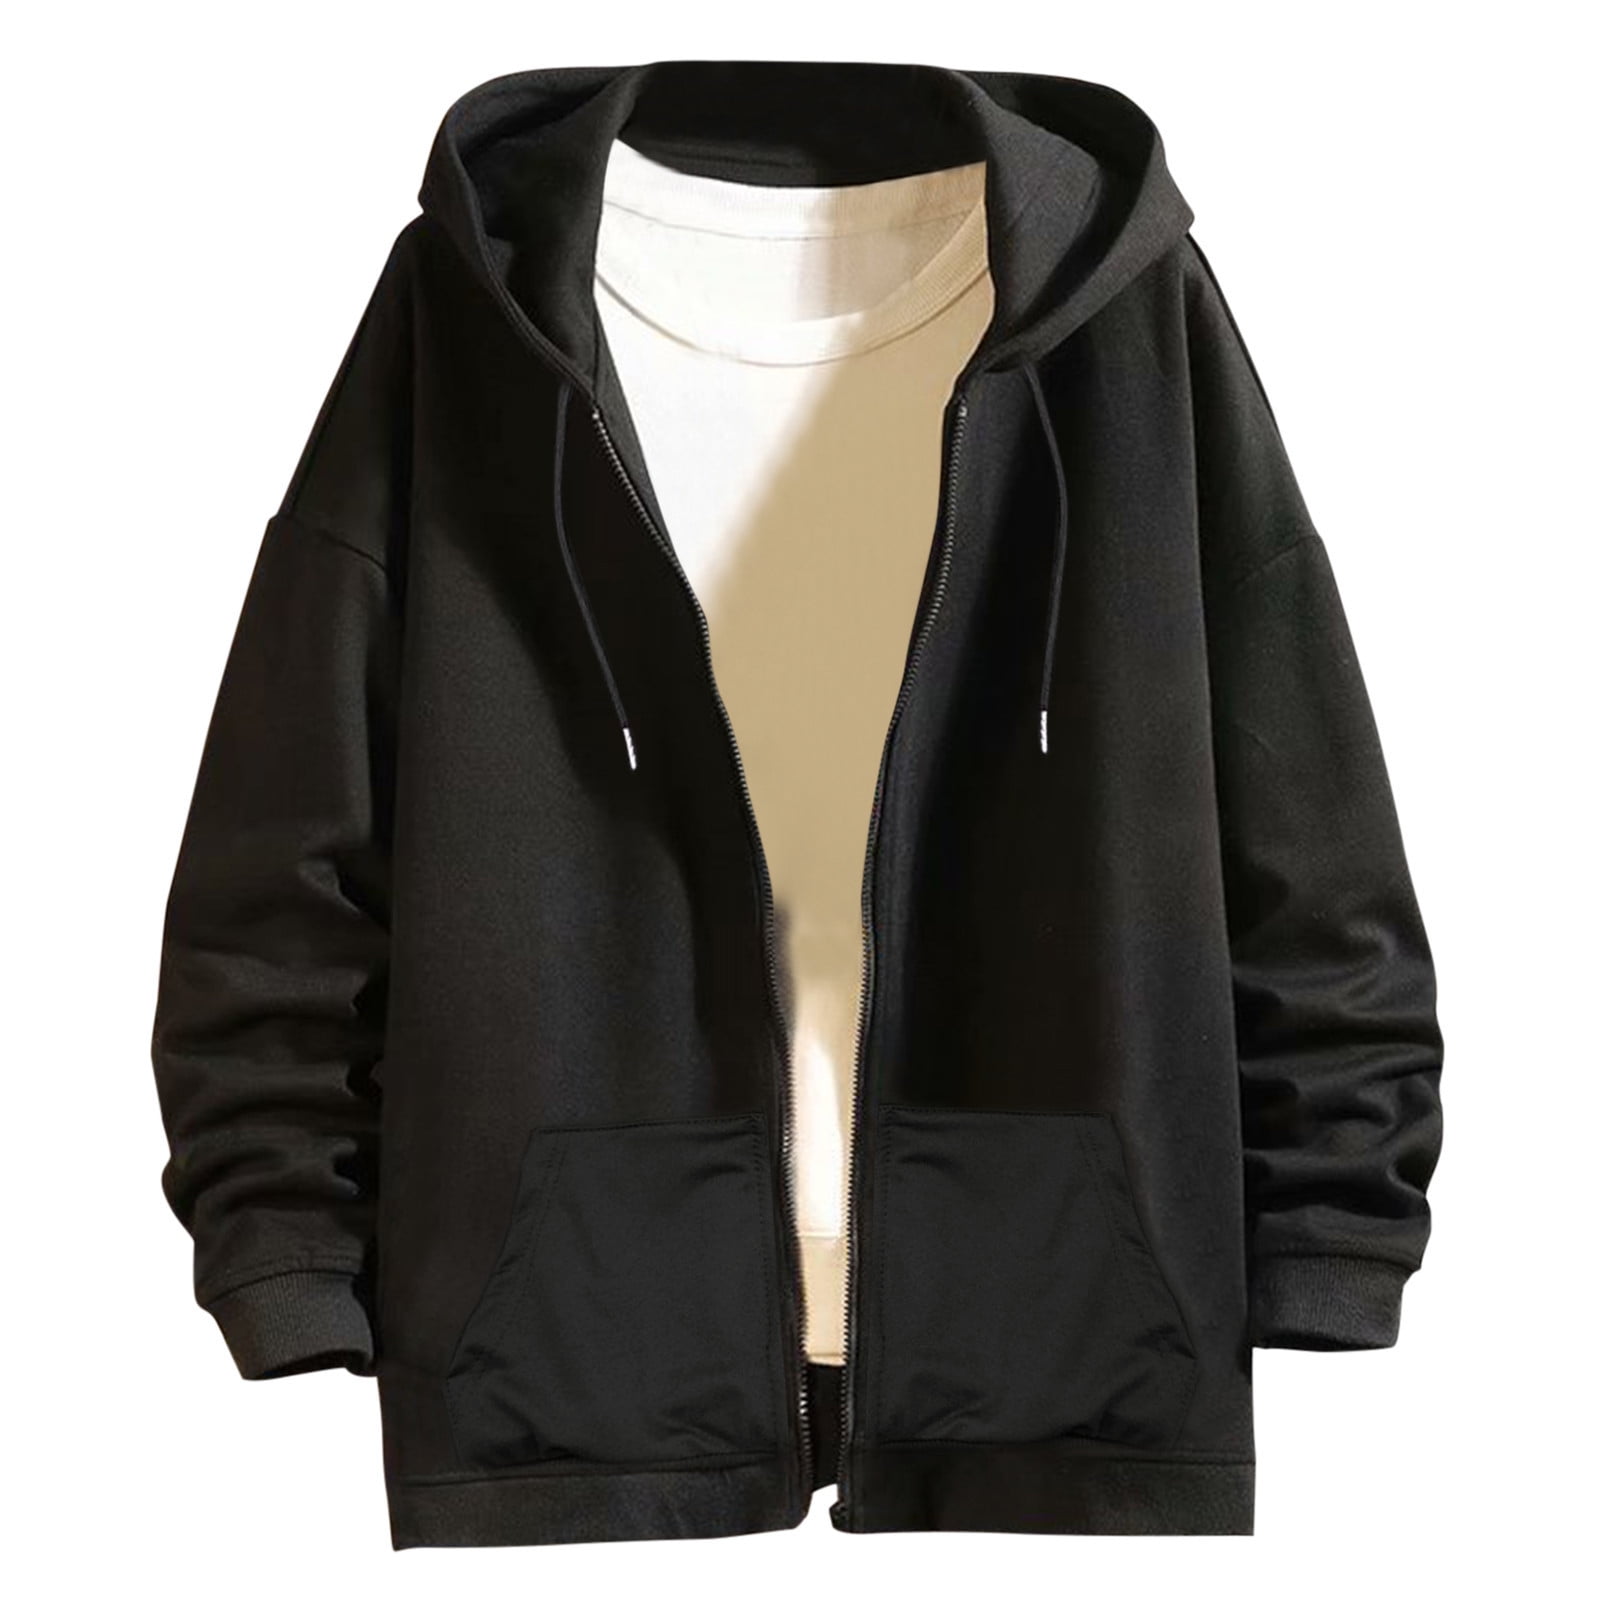 Simplmasygenix Clearance Men's Long Sleeve Jacket Coat Zipper Casual Print  Stand Collar With d Jacket 